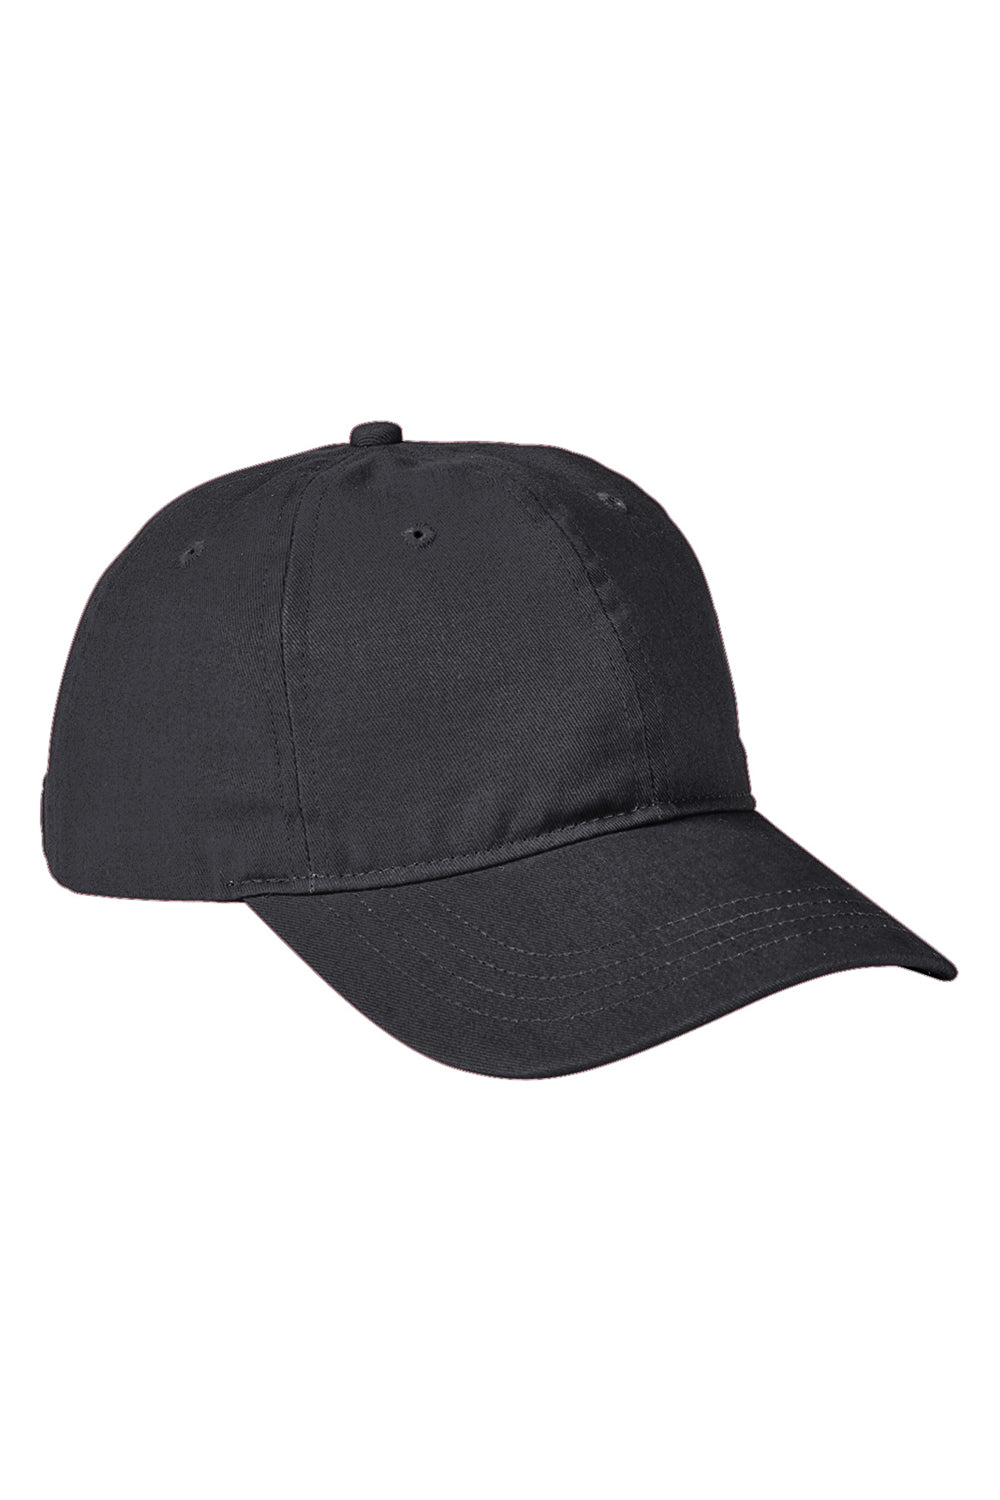 Big Accessories BA611 Mens Ultimate Adjustable Hat Black Flat Front